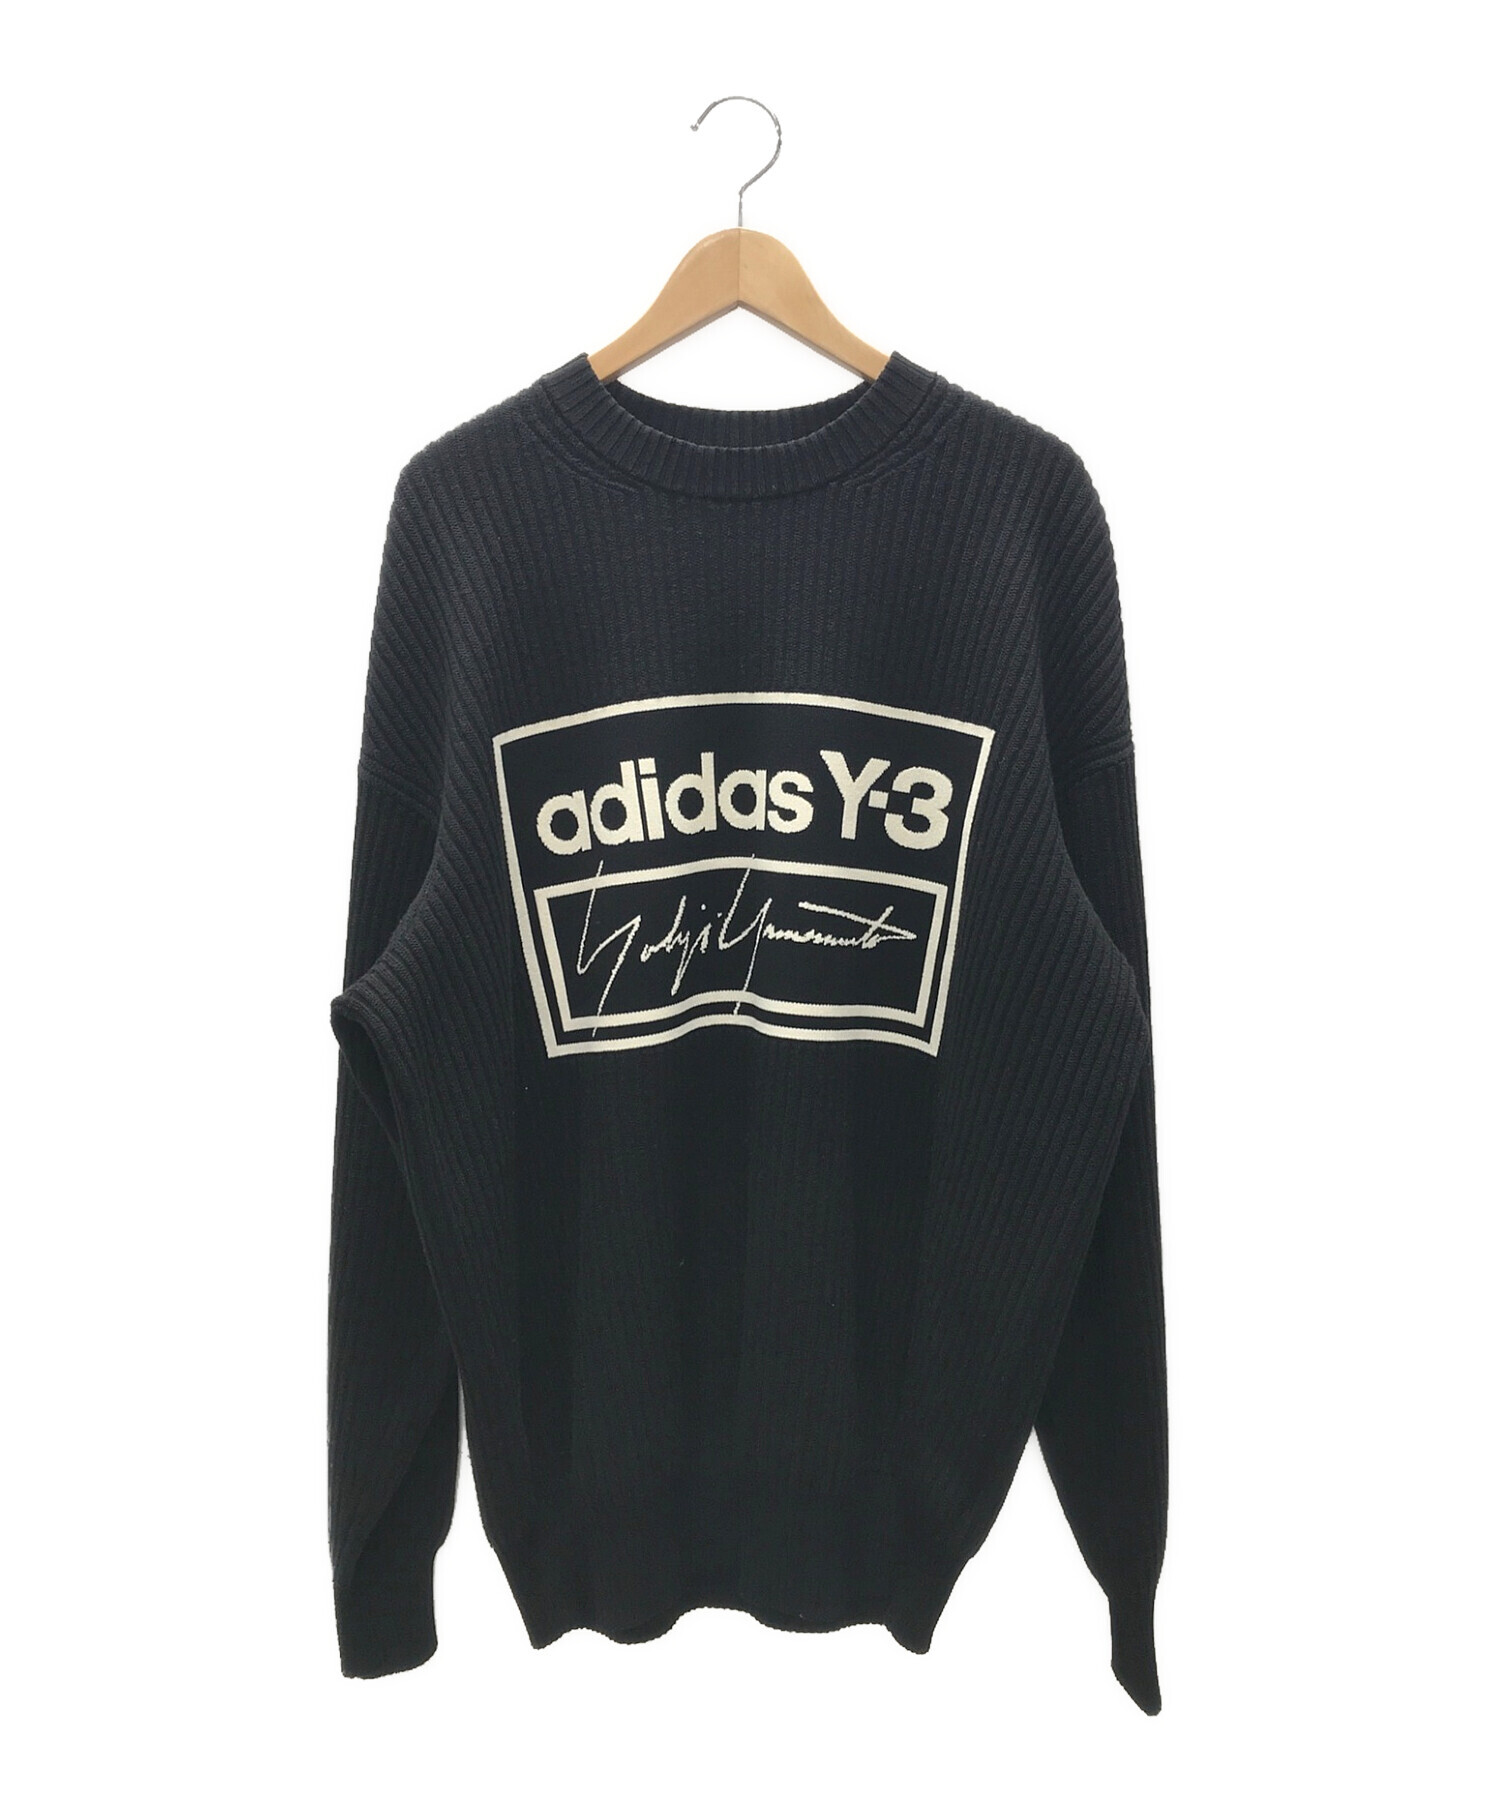 adidas (アディダス) Y-3 (ワイスリー) Tech knit Crew Sweater ブラック サイズ:XXS